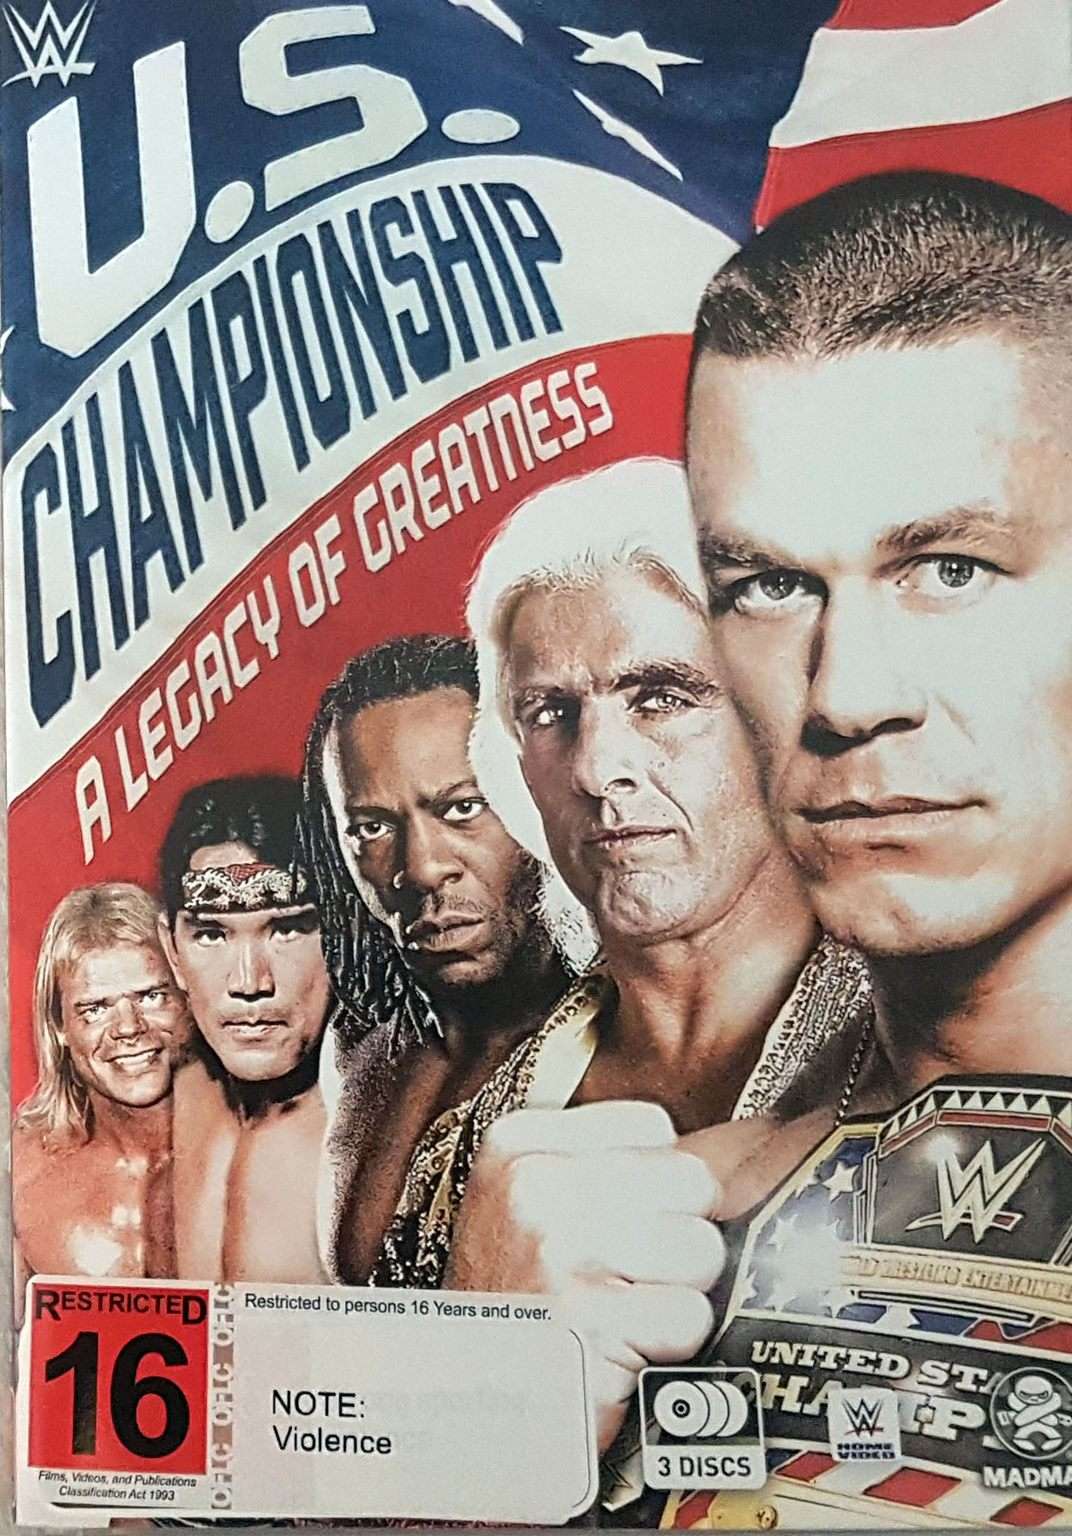 WWE: U.S Championship - A Legacy of Greatness 3 Disc Set